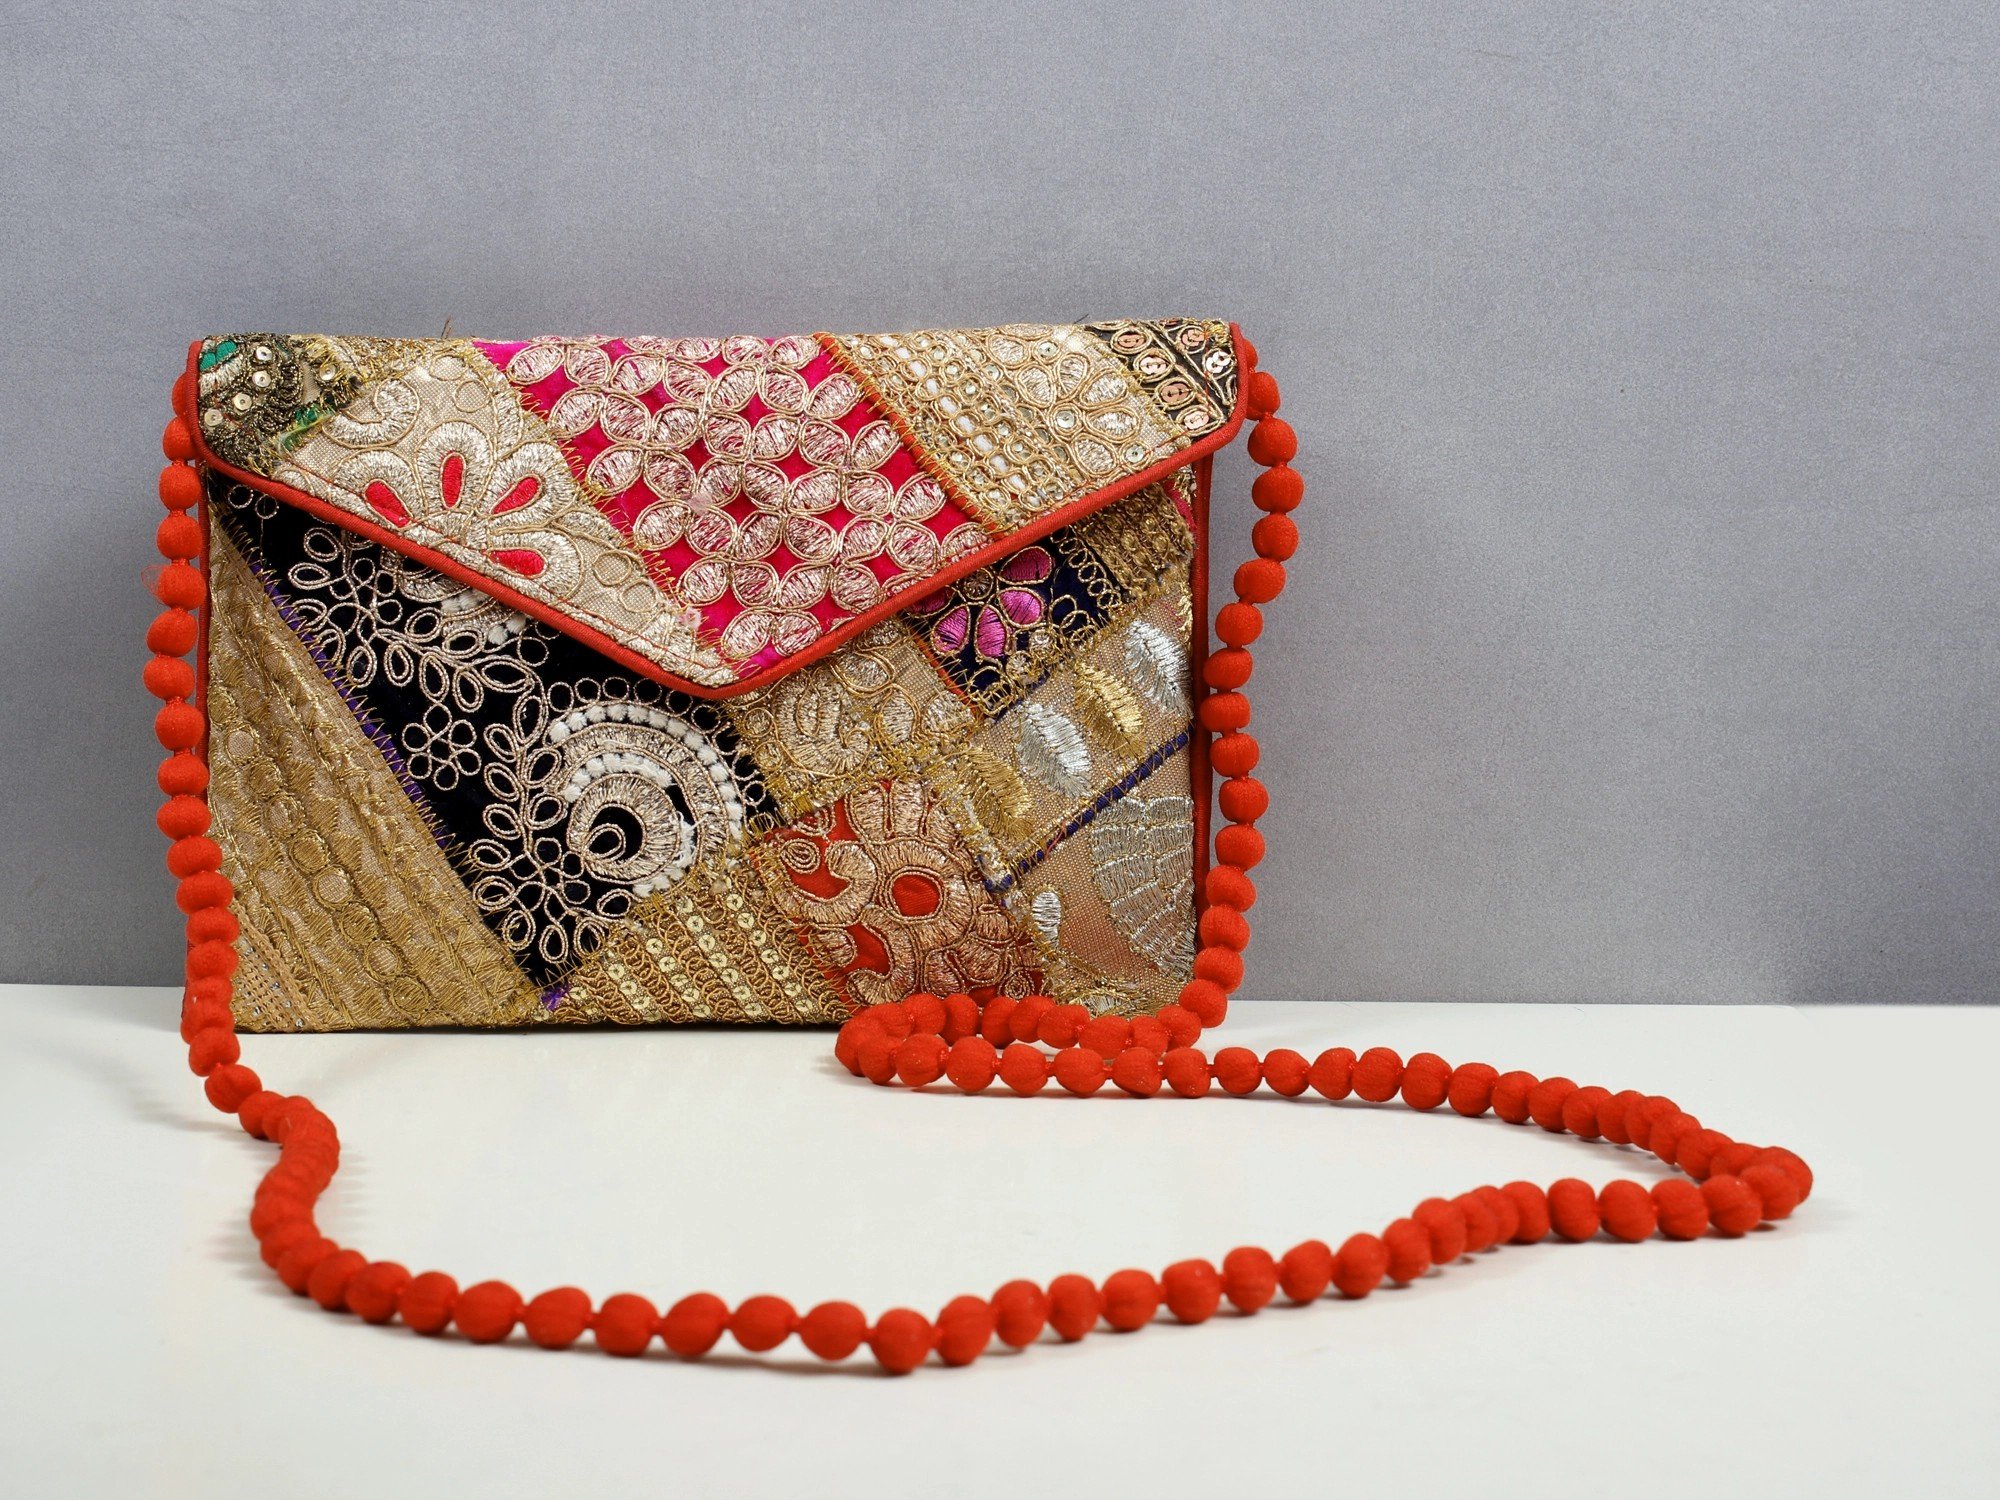 Vintage and DIY Handbags with Wood Handles -